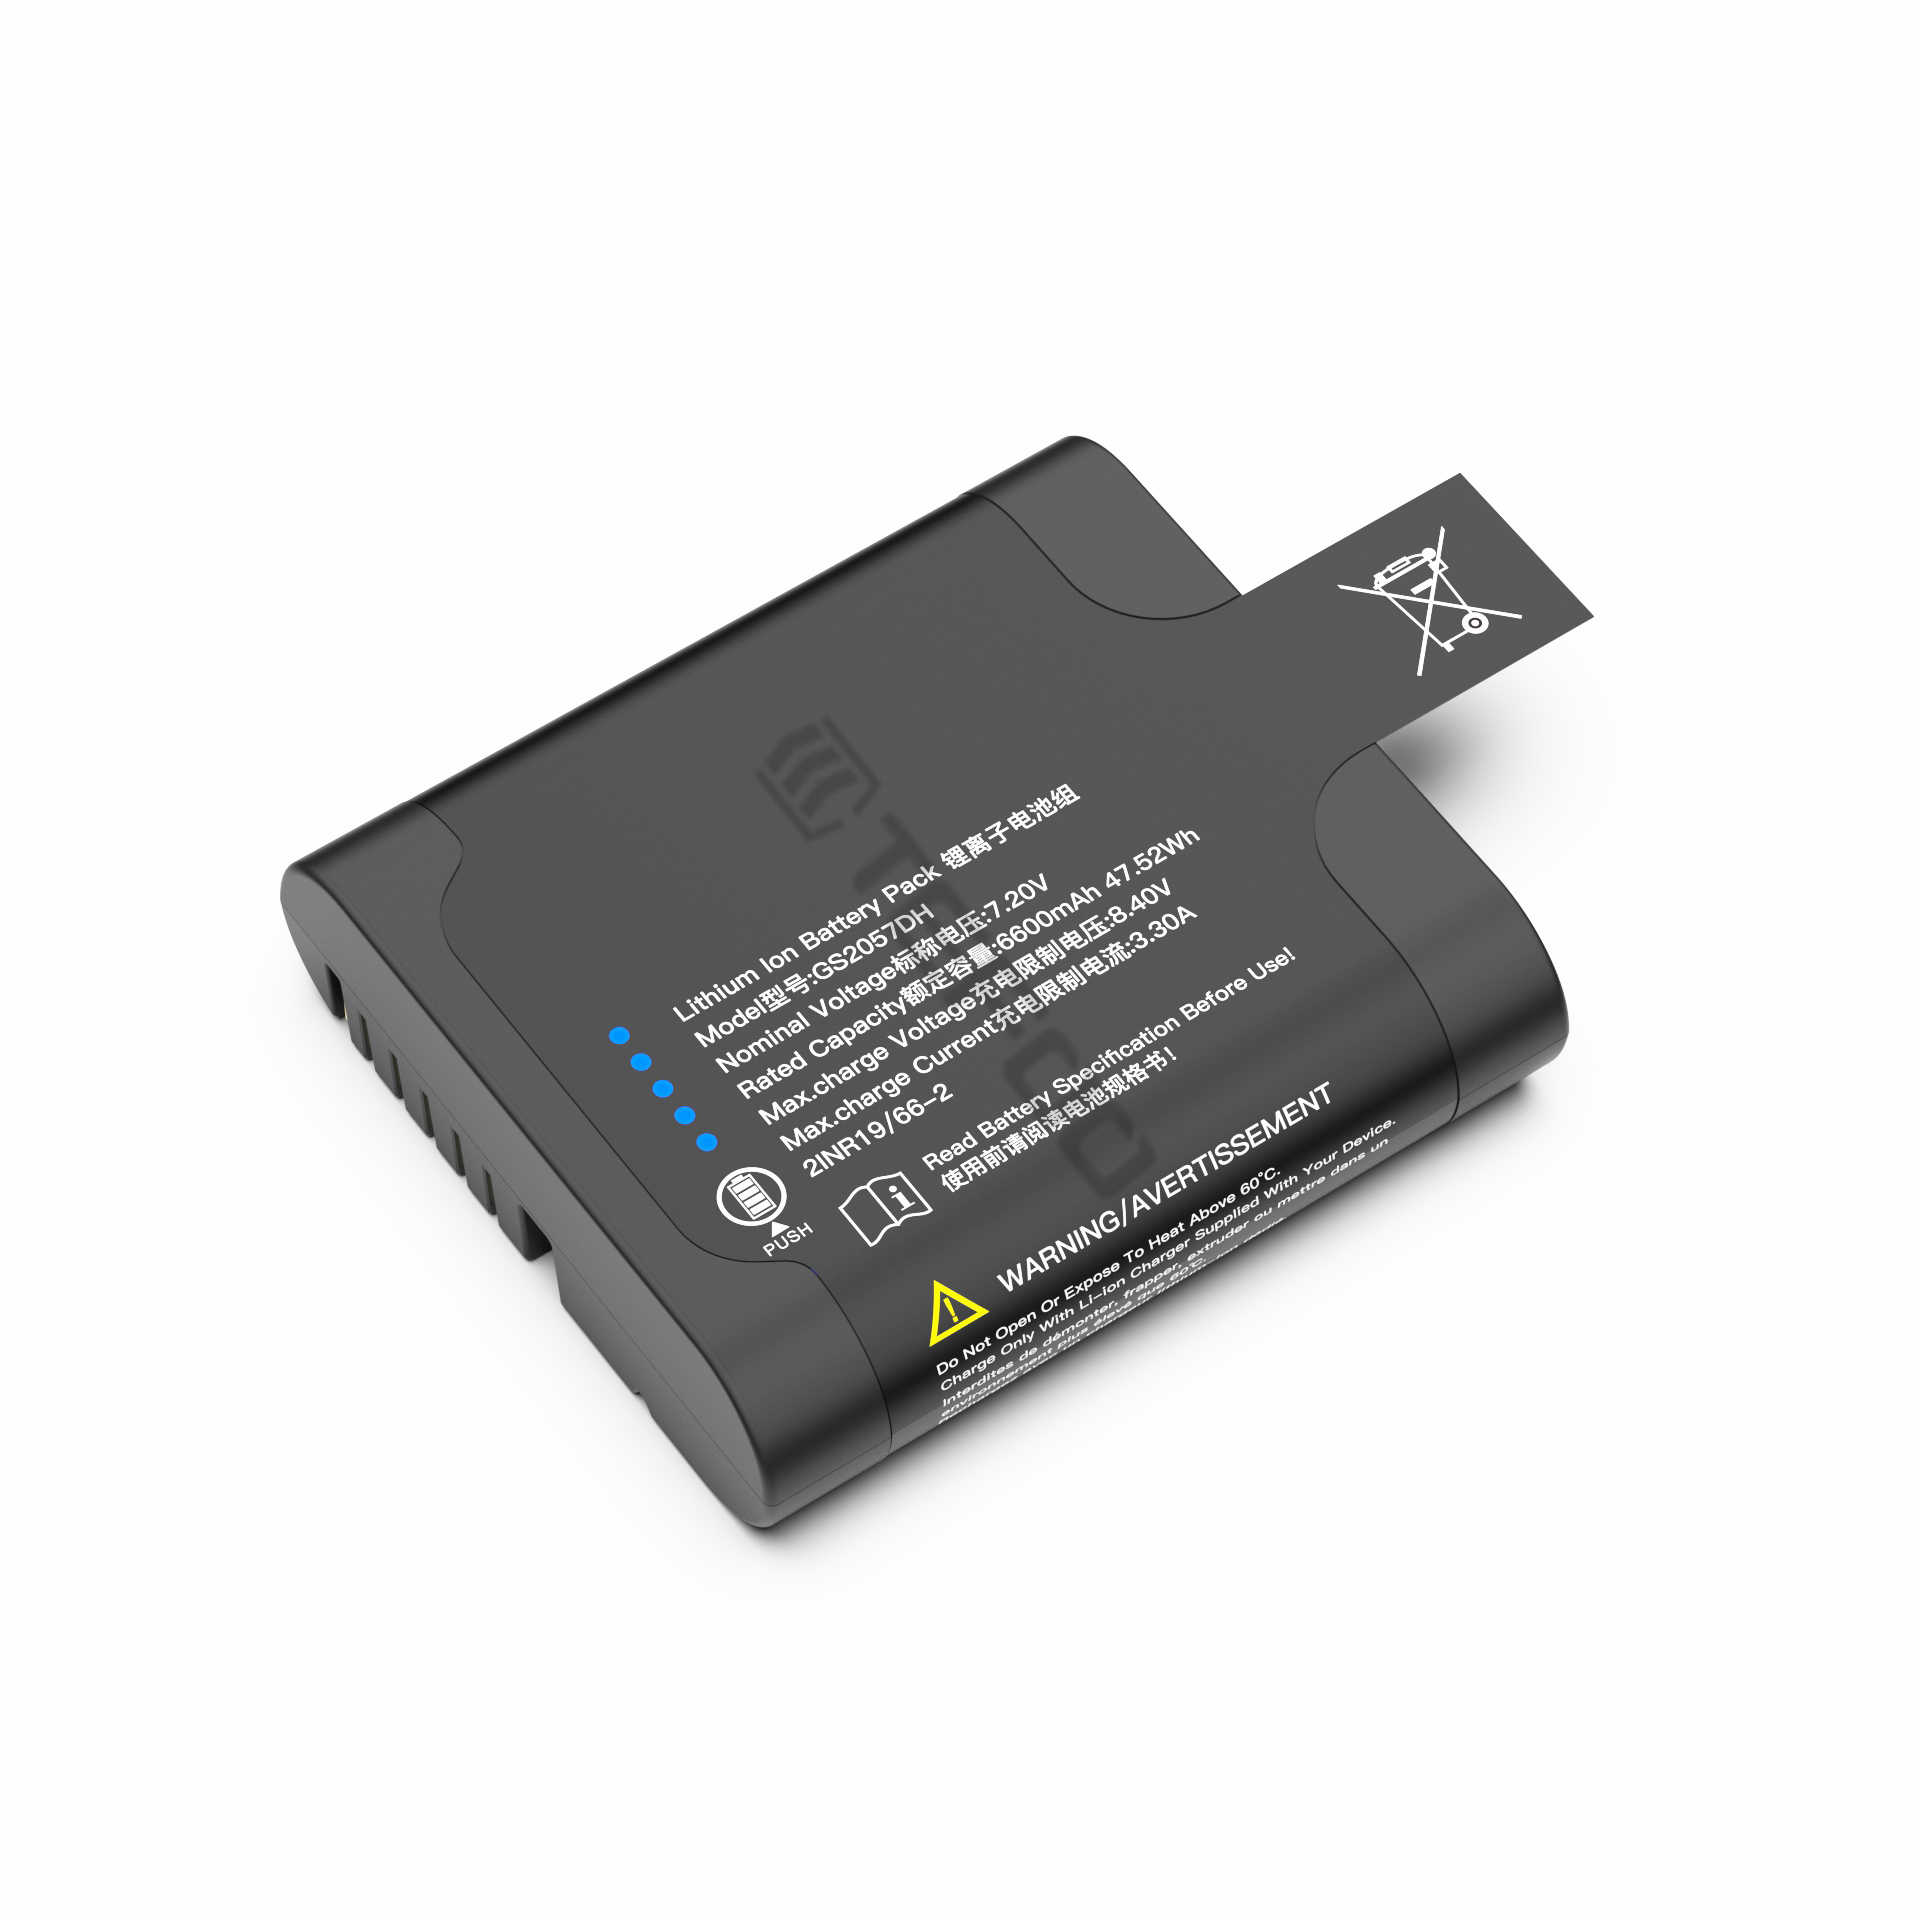 2S2P Standard battery pack